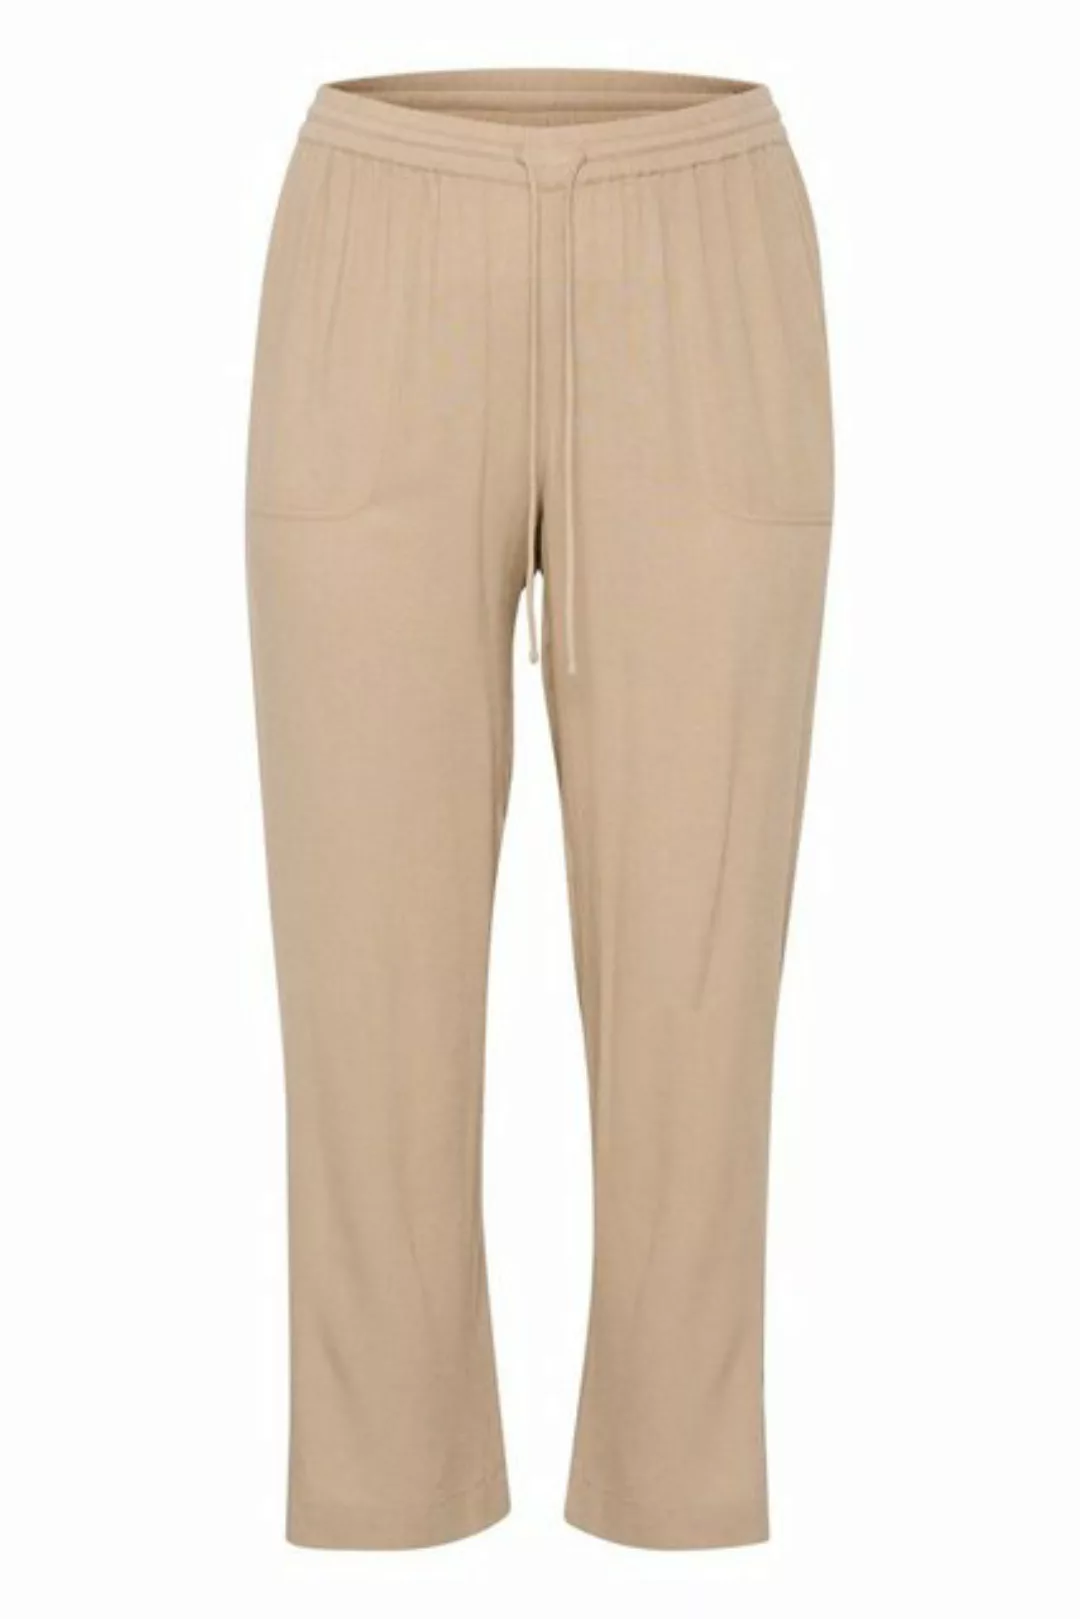 KAFFE Curve Anzughose Pants Suiting KCmille Große Größen günstig online kaufen